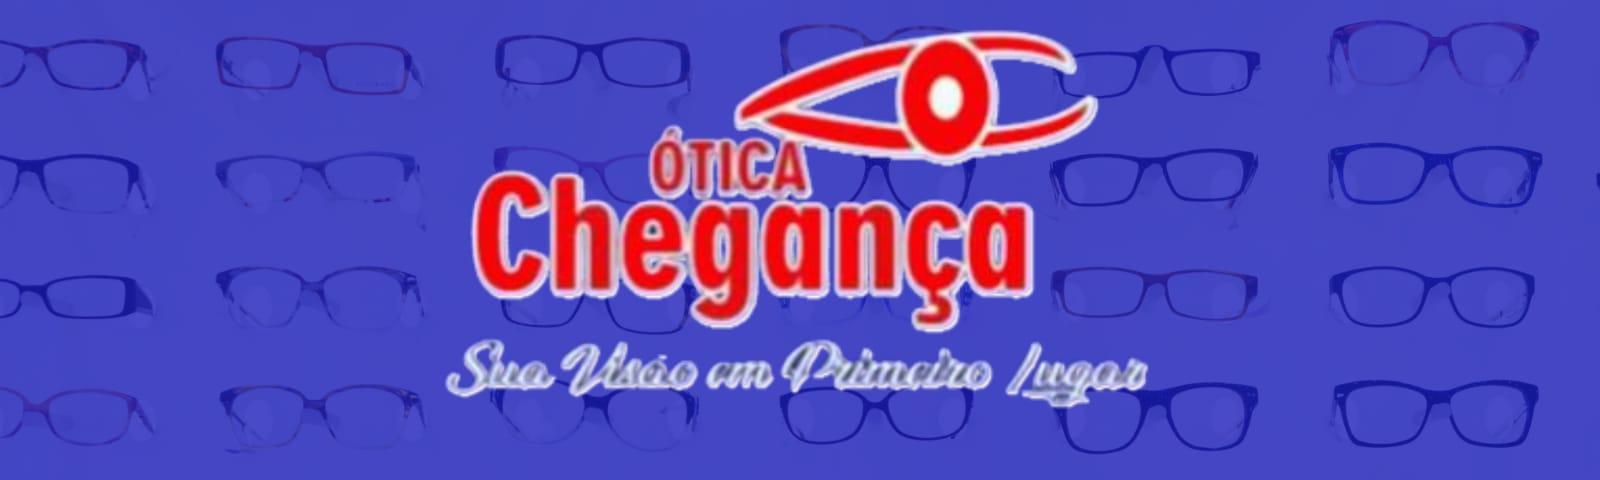 banner da empresa Ótica Chegança